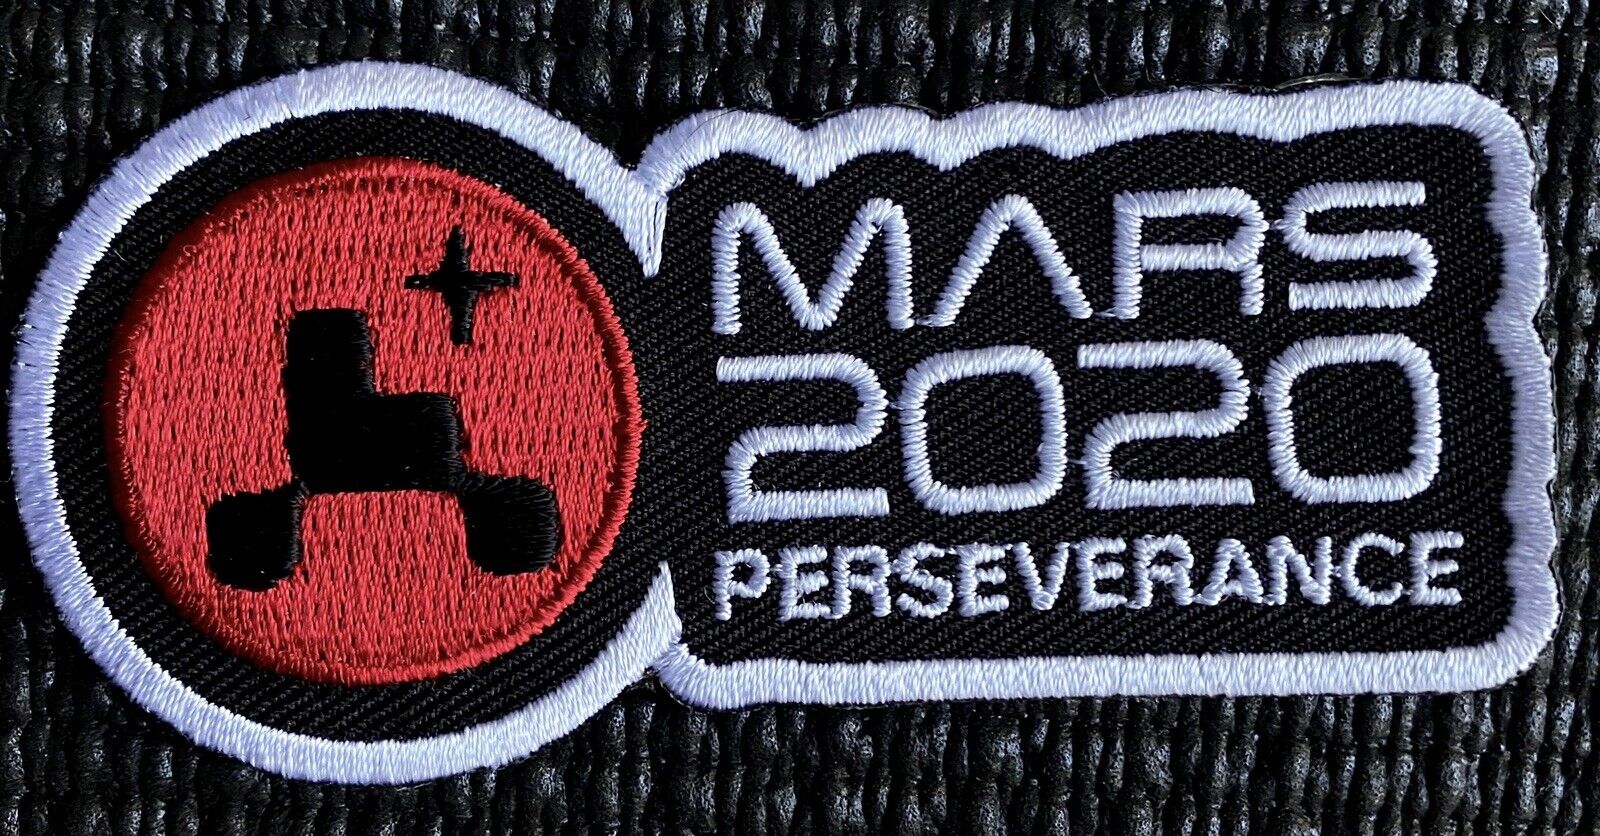 NASA JPL - MARS 2020 PERSEVERANCE ROVER - Program Mission PATCH - 3.5”